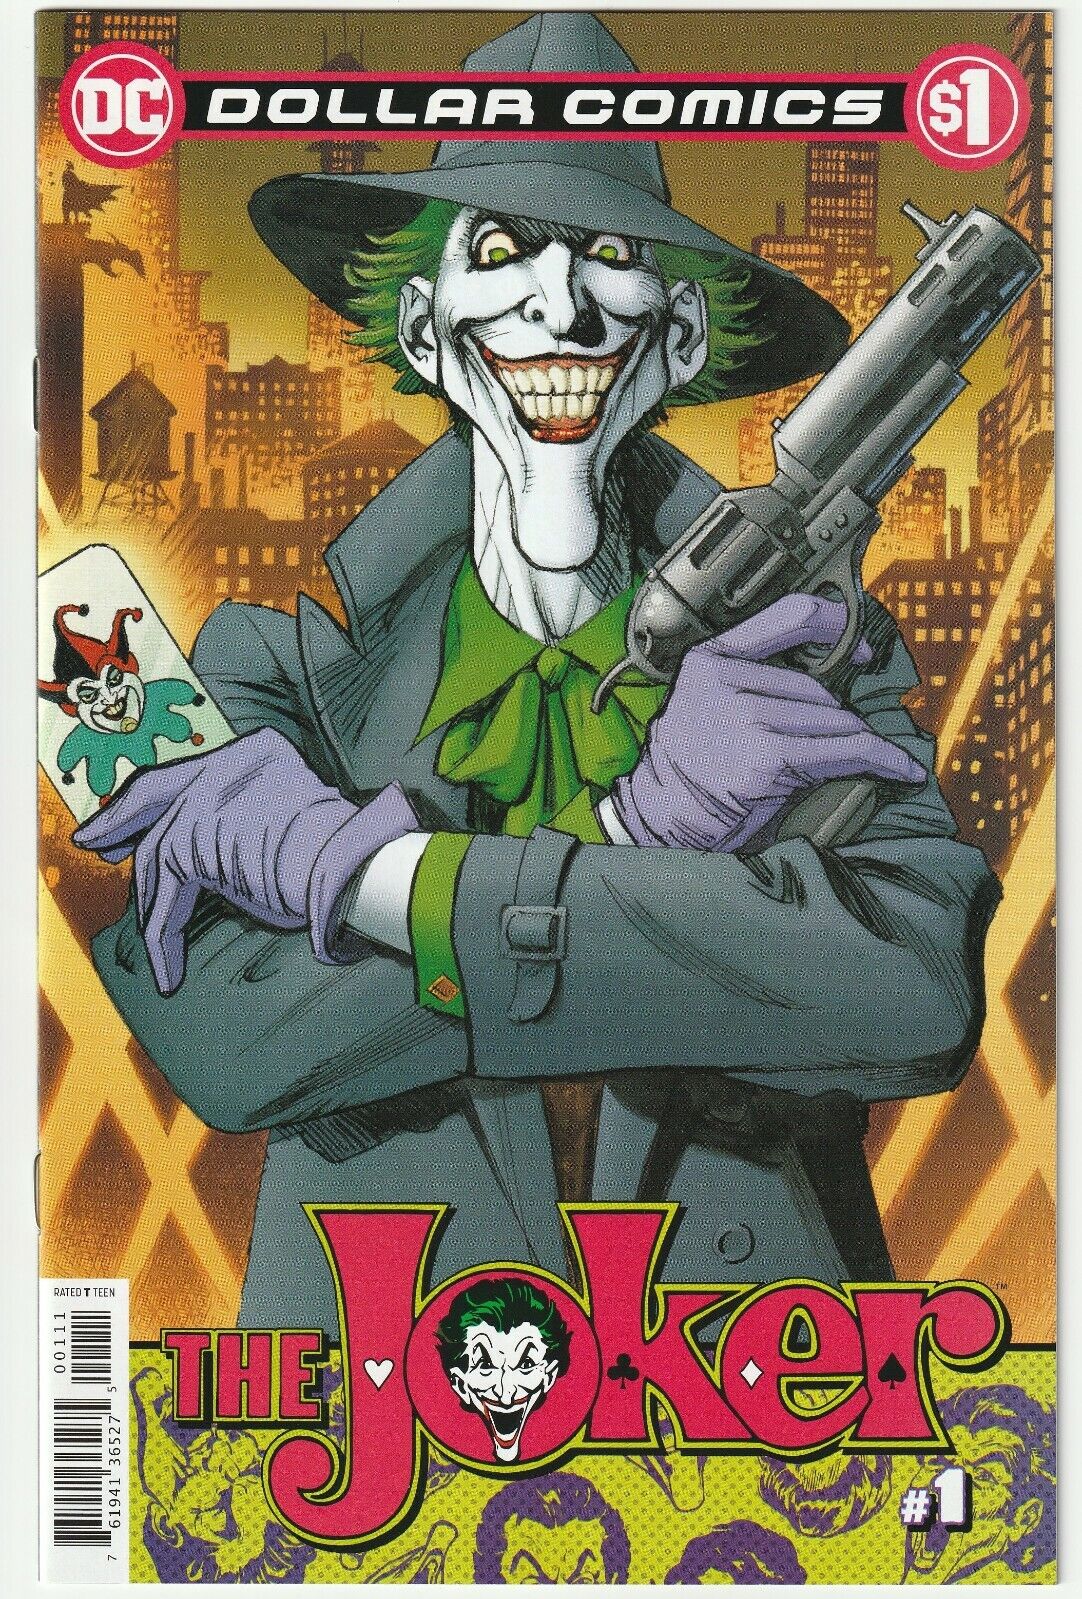 THE JOKER #1 Reprint (1975) NEW Dollar Comics DC 2019